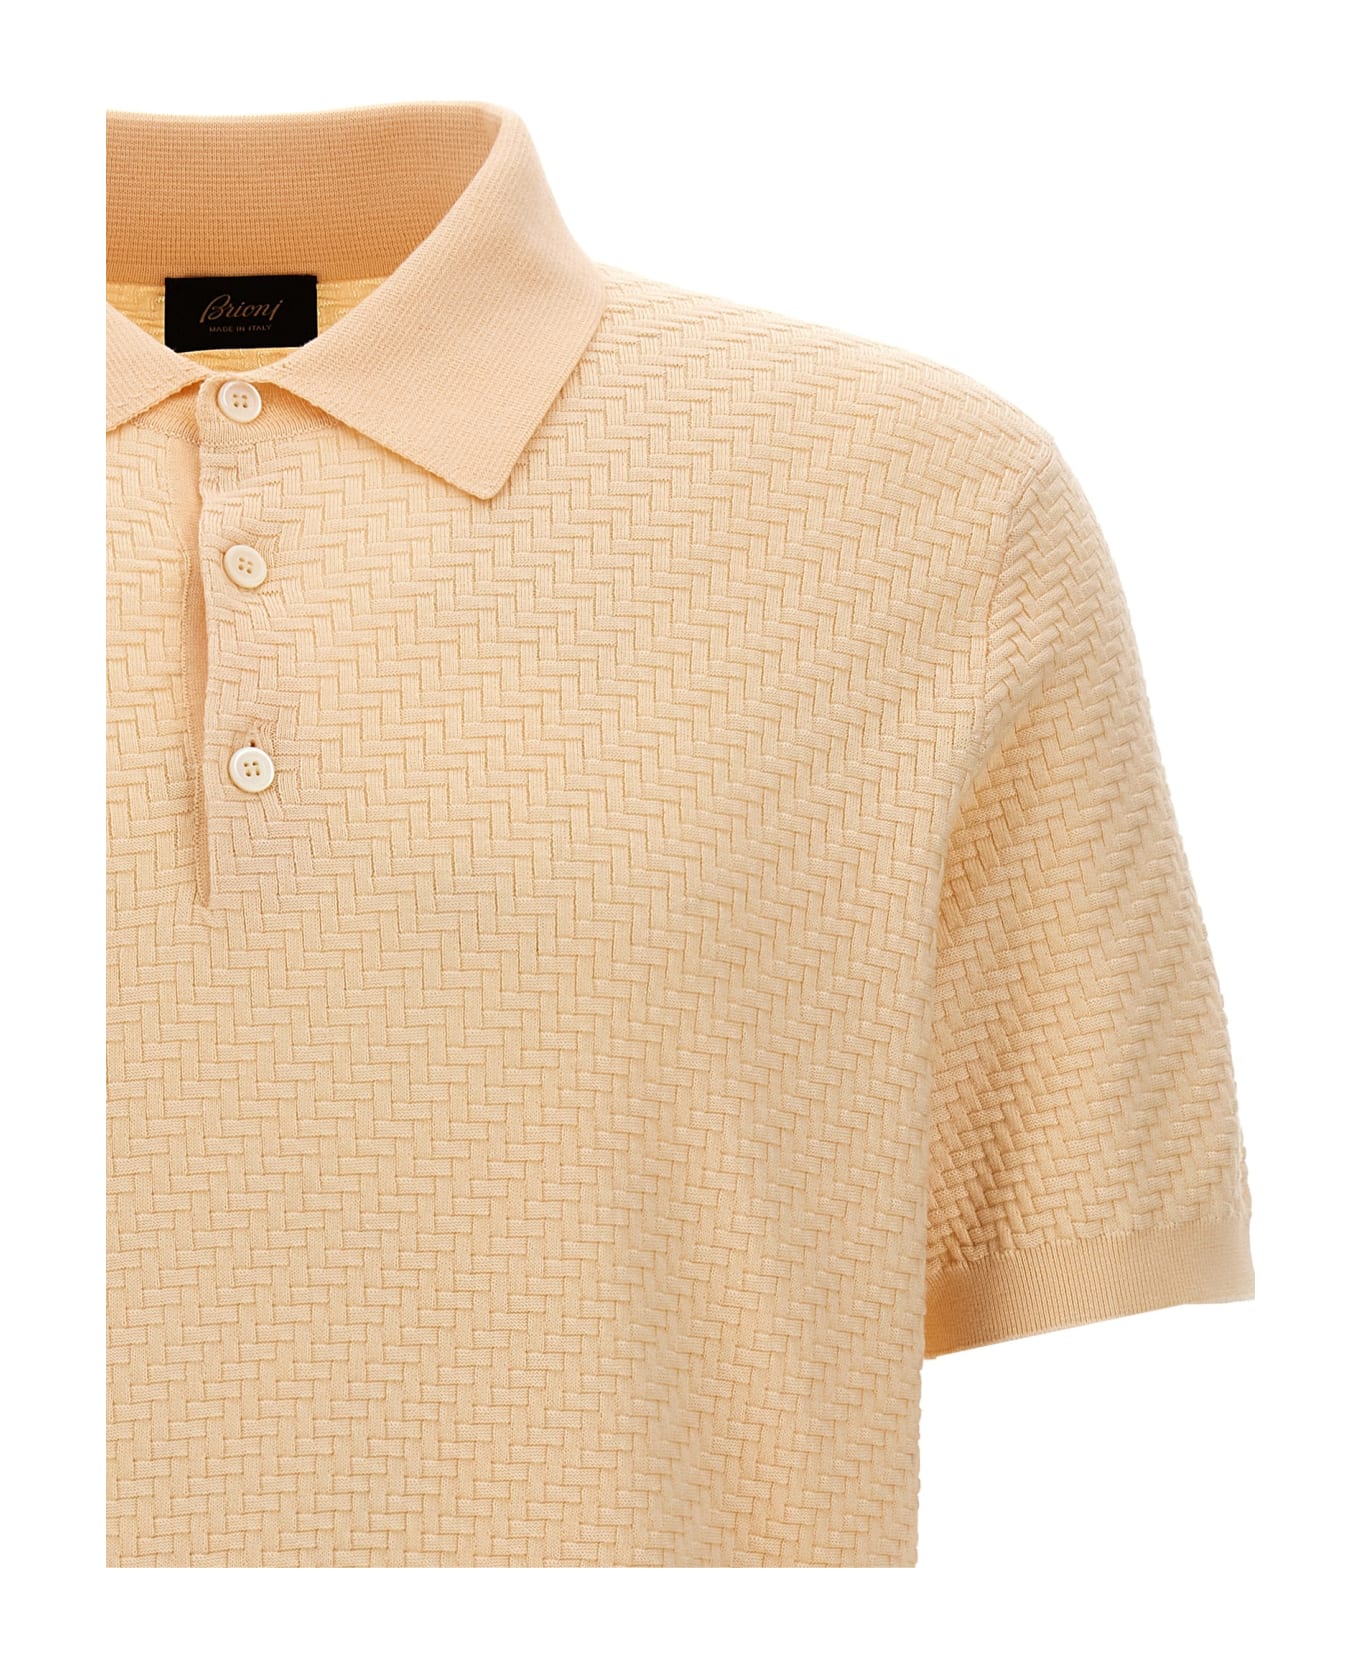 Brioni Knit Polo Shirt - Beige